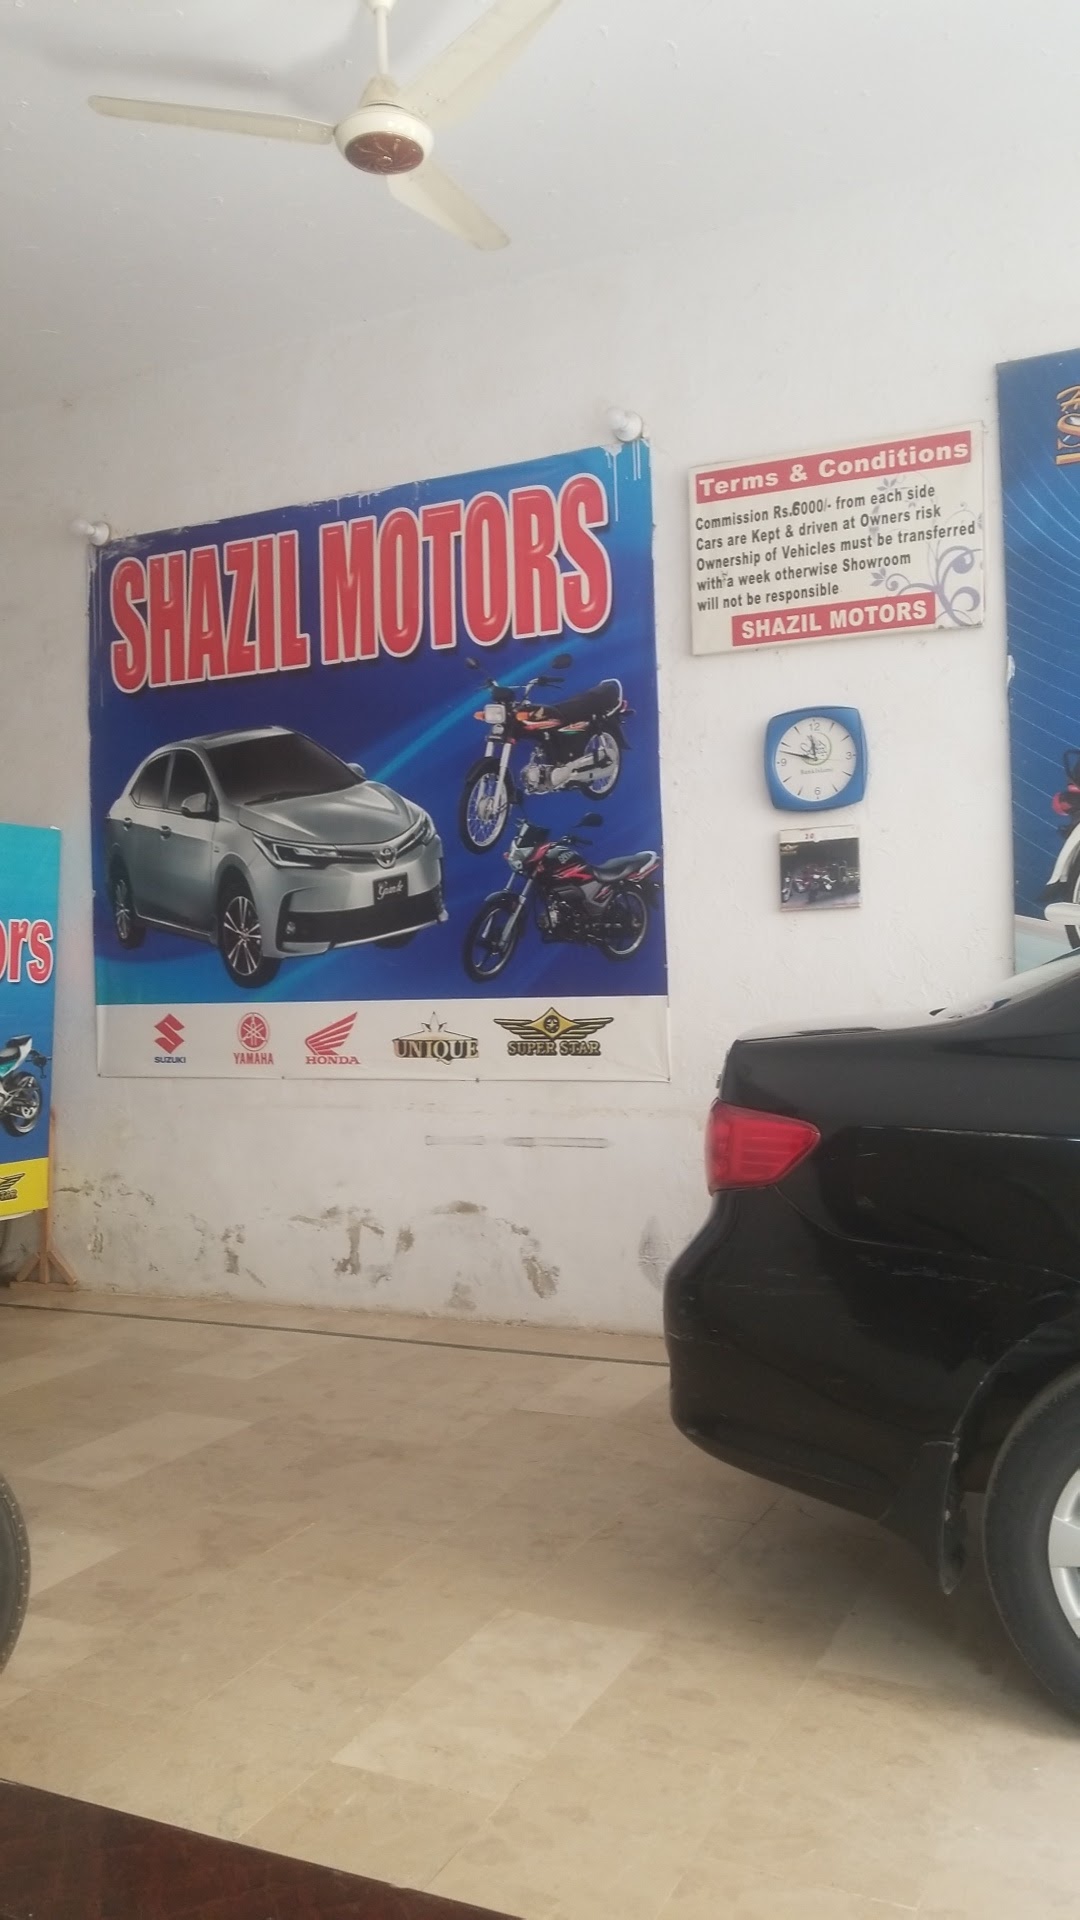 Shazil Motors